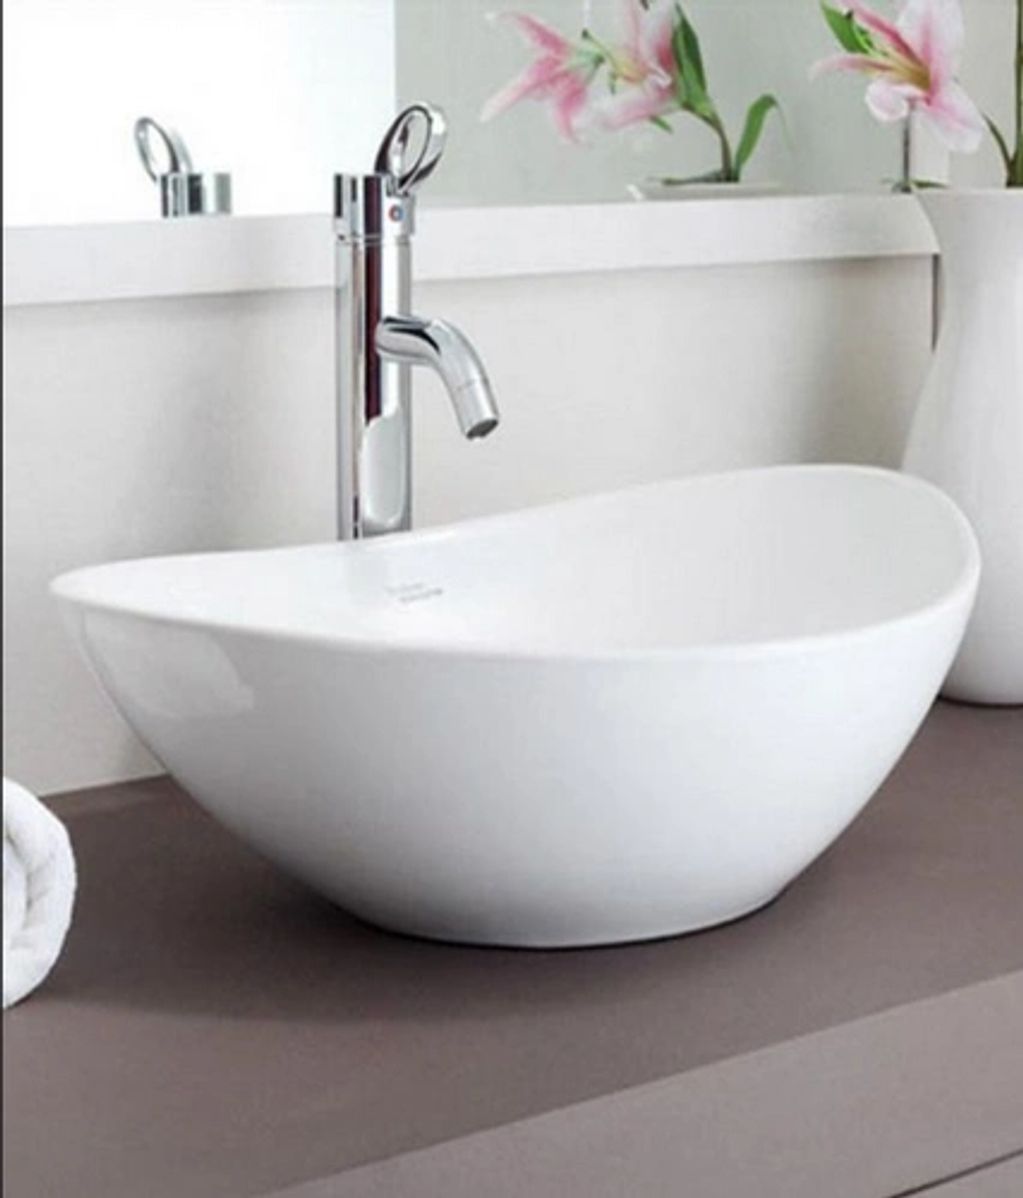 Wash Basins, Designer Wash Basins. Hindware, Grohe, American Standard.
Vaish Marbles Bareilly.